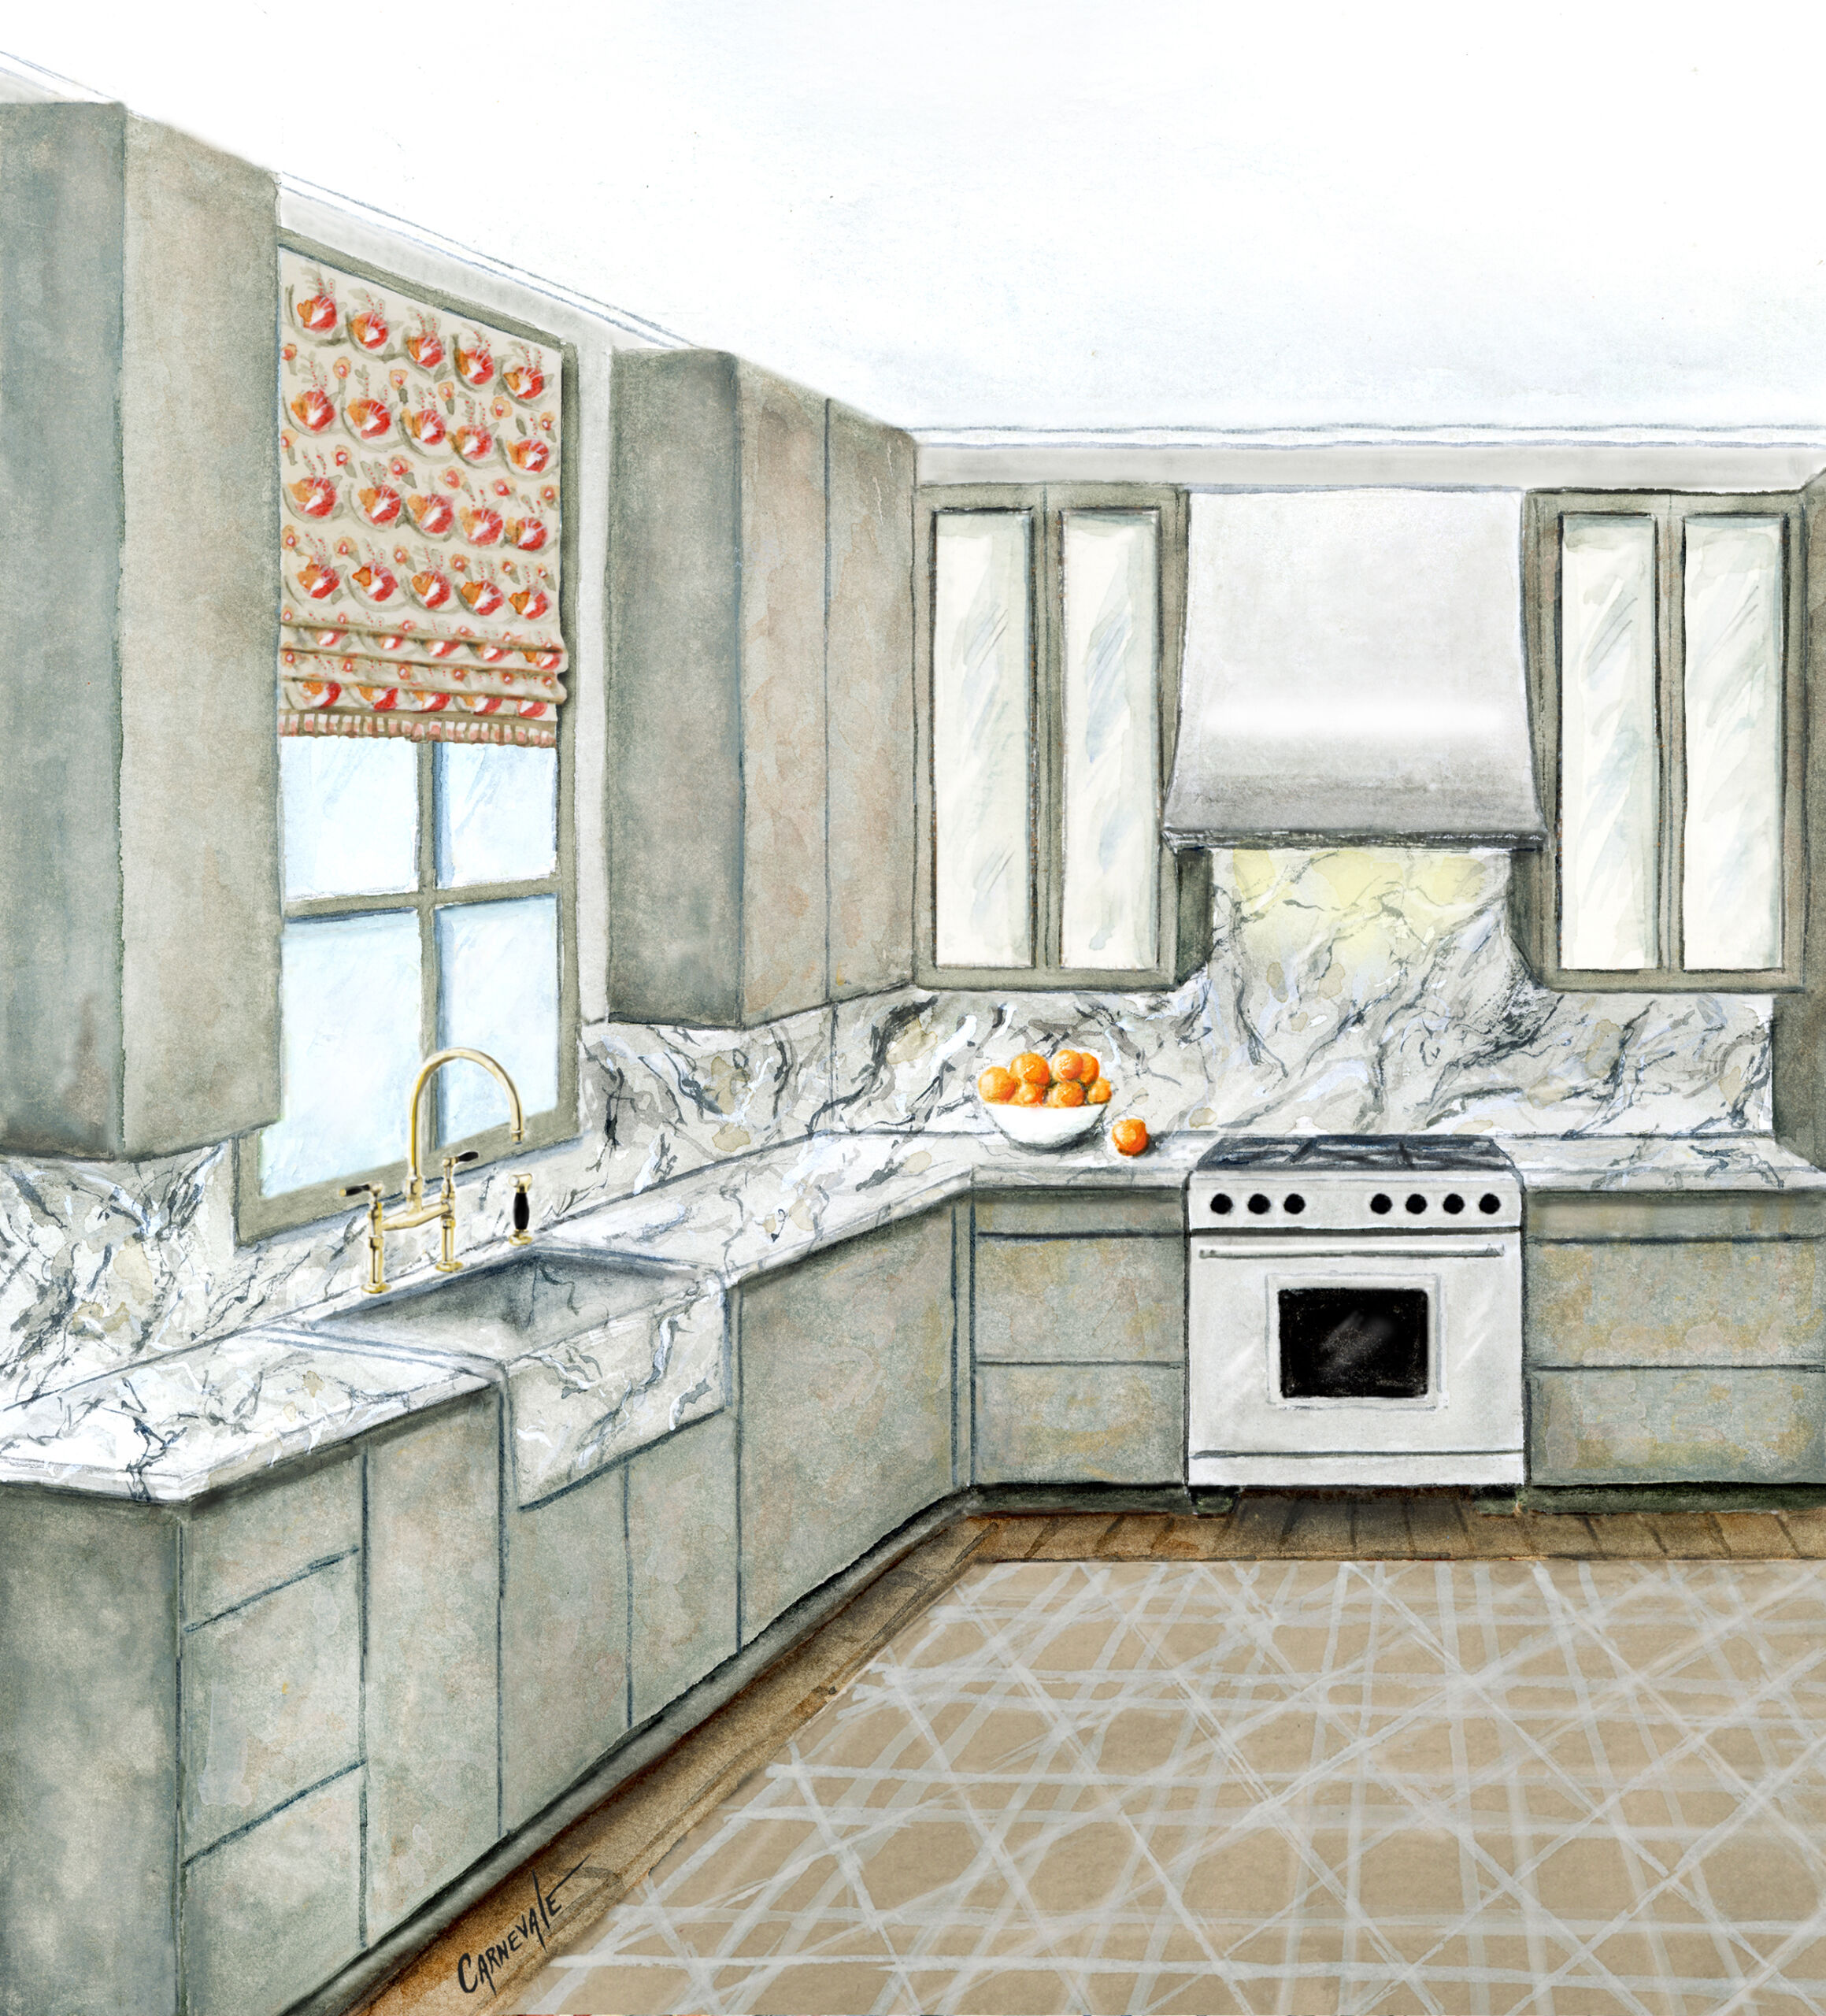 Artist's rendering of catering kitchen designed by Melanie Millner